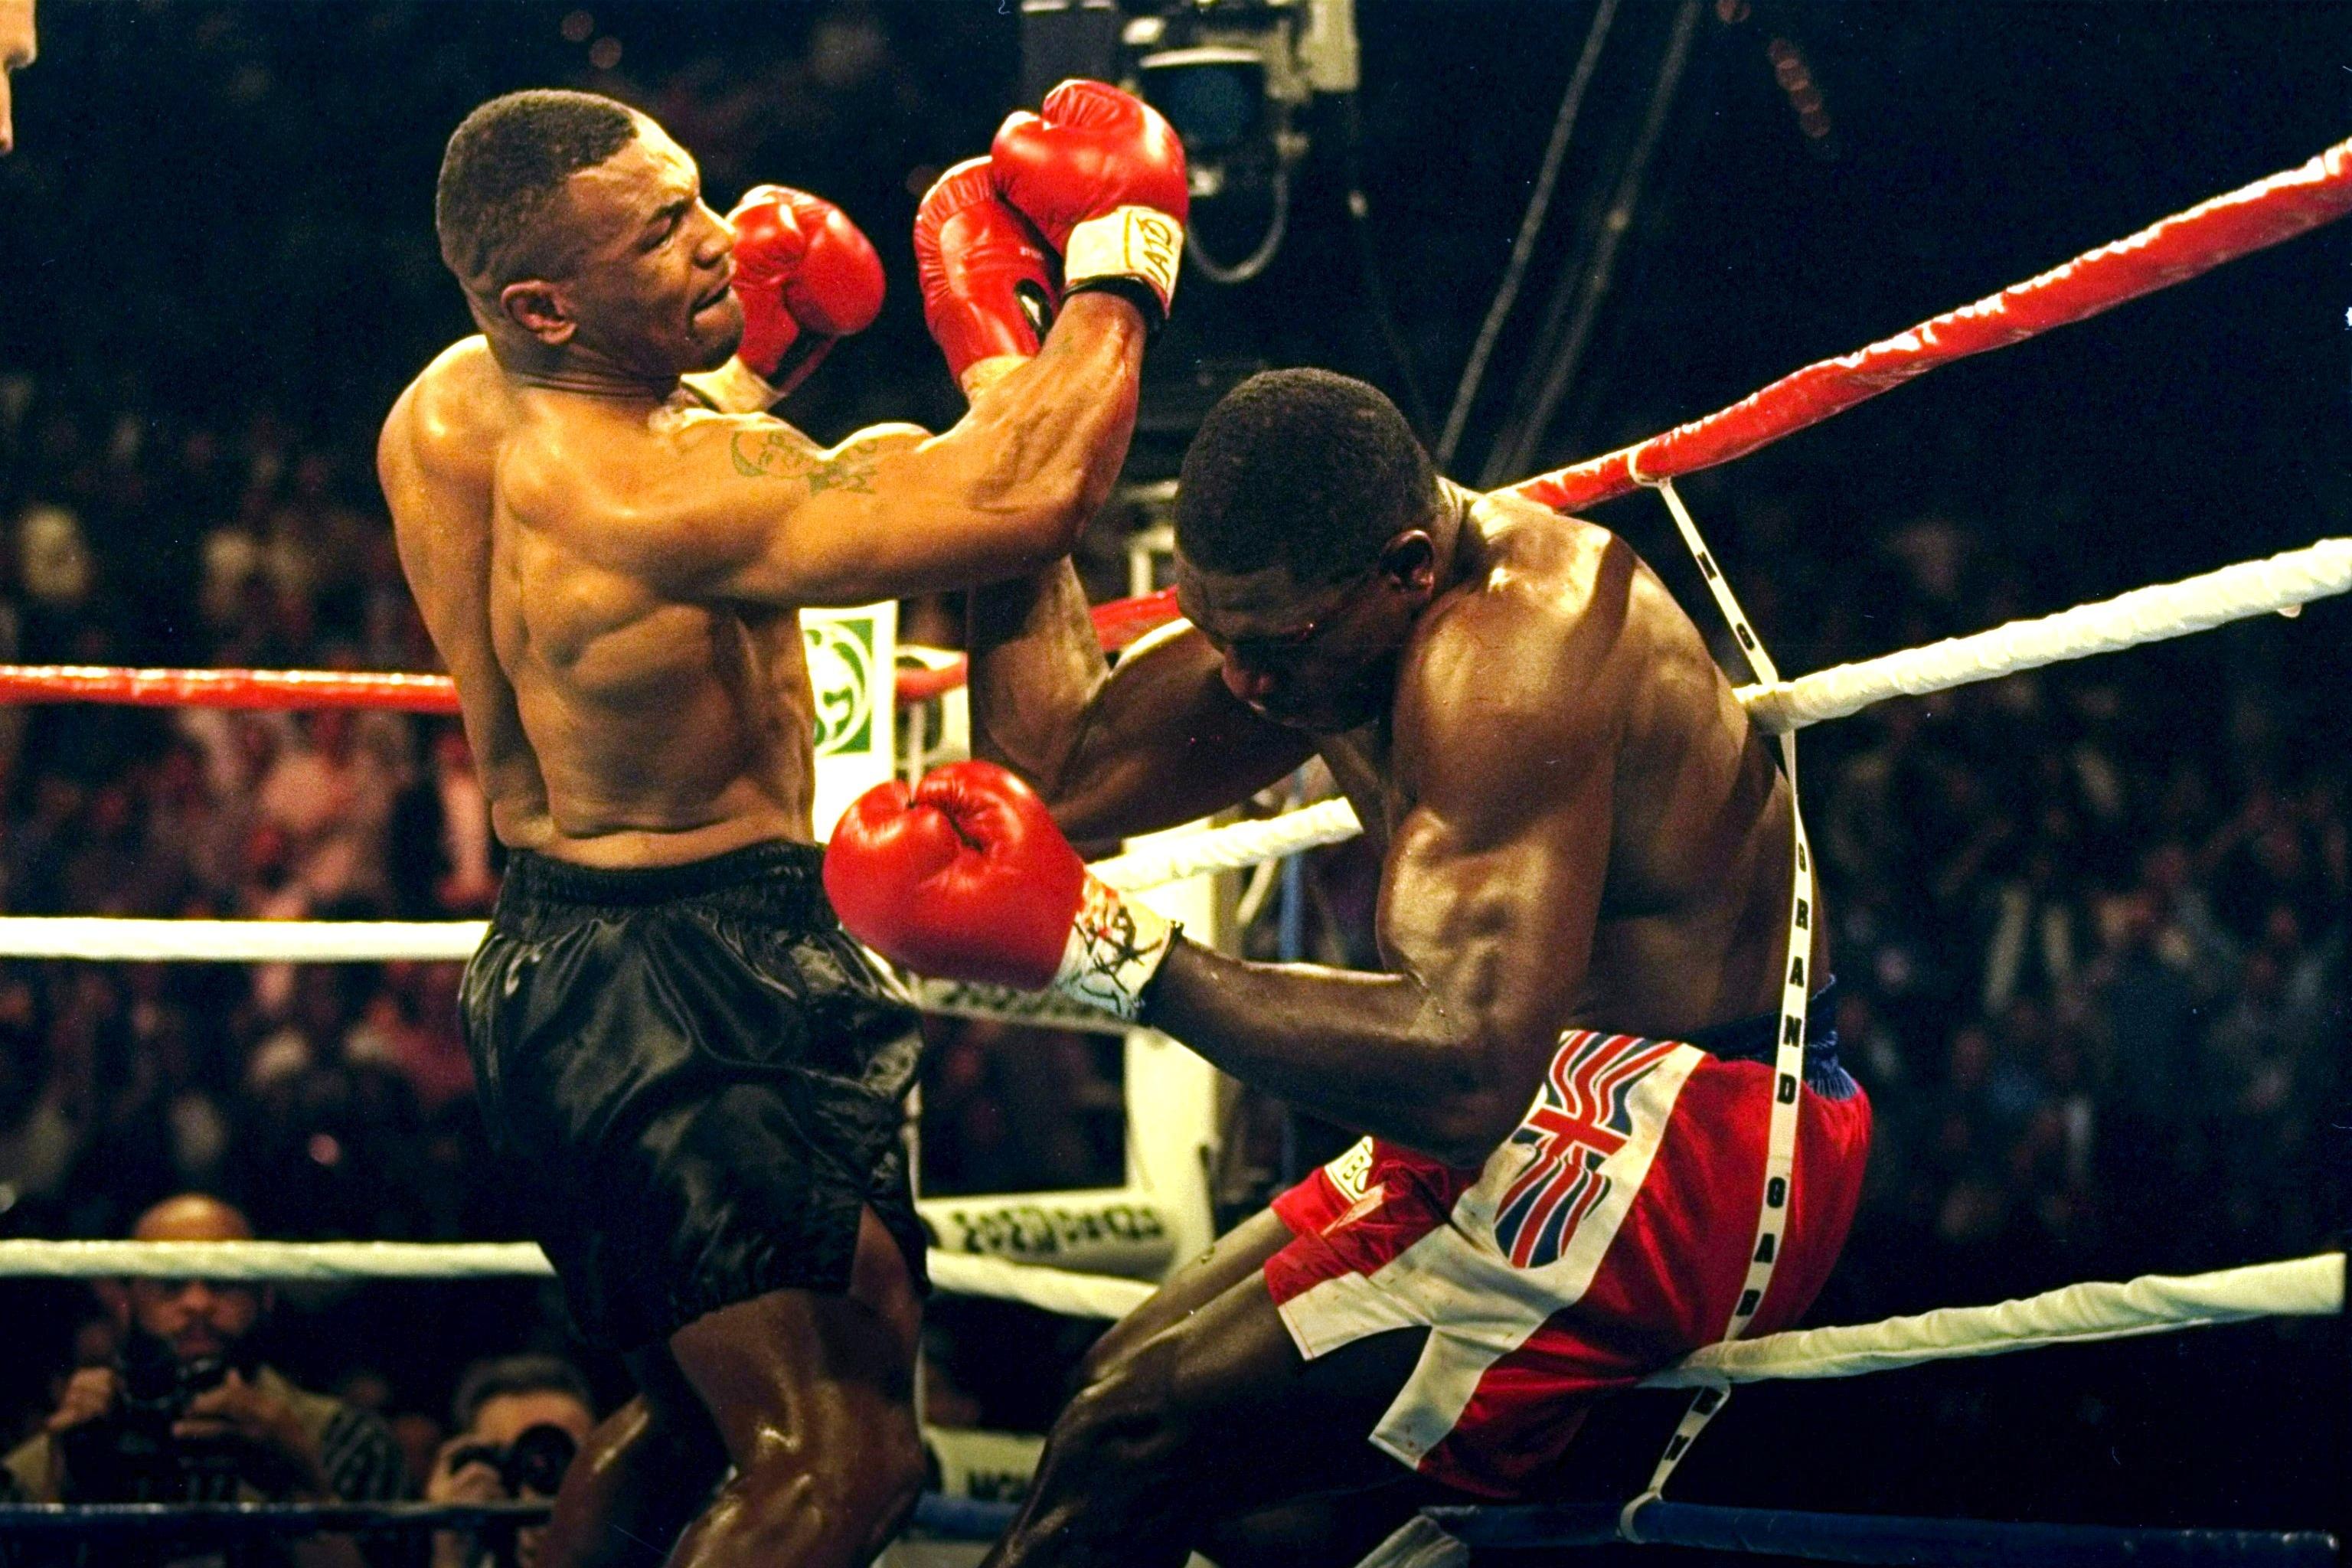 Mike Tyson Wallpaper 4K American Boxer Athlete 11147